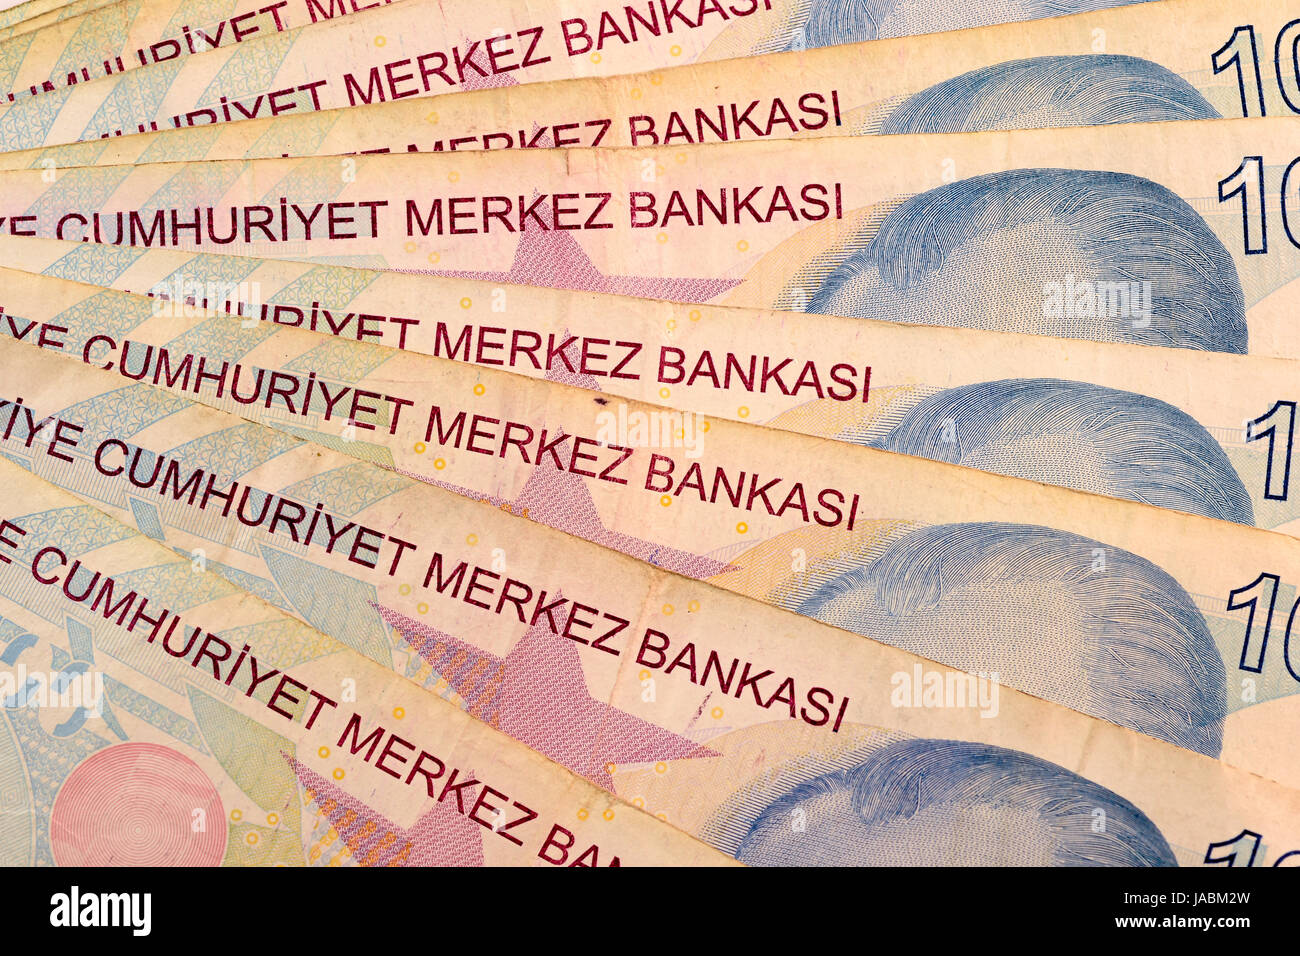 Chiudere la lira turca valuta nota, lira turca Türk lirası (Turco) 200 Türk Lirası ₺200 banconota (complementare) Codice ISO 4217 numero di prova Foto Stock